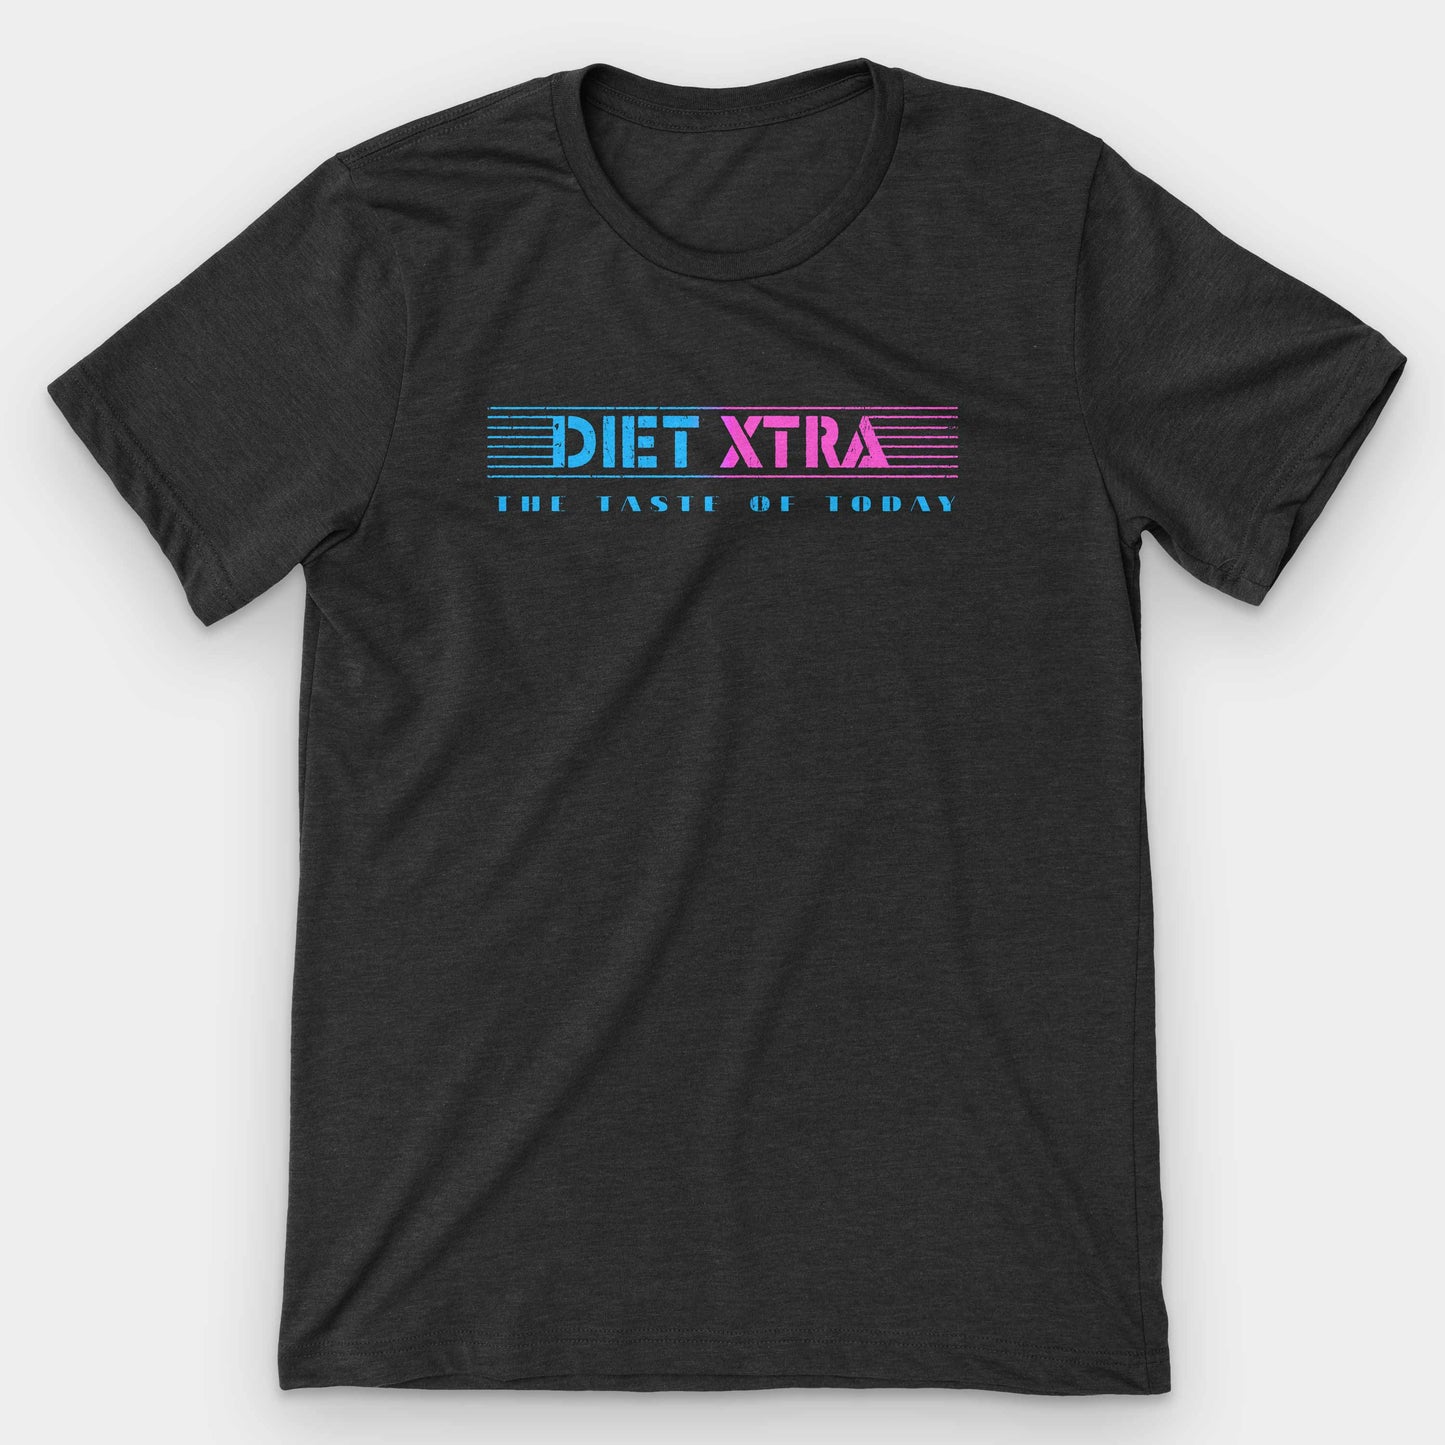 Black Heather Diet Xtra Soda Graphic T-Shirt by Snaxtime